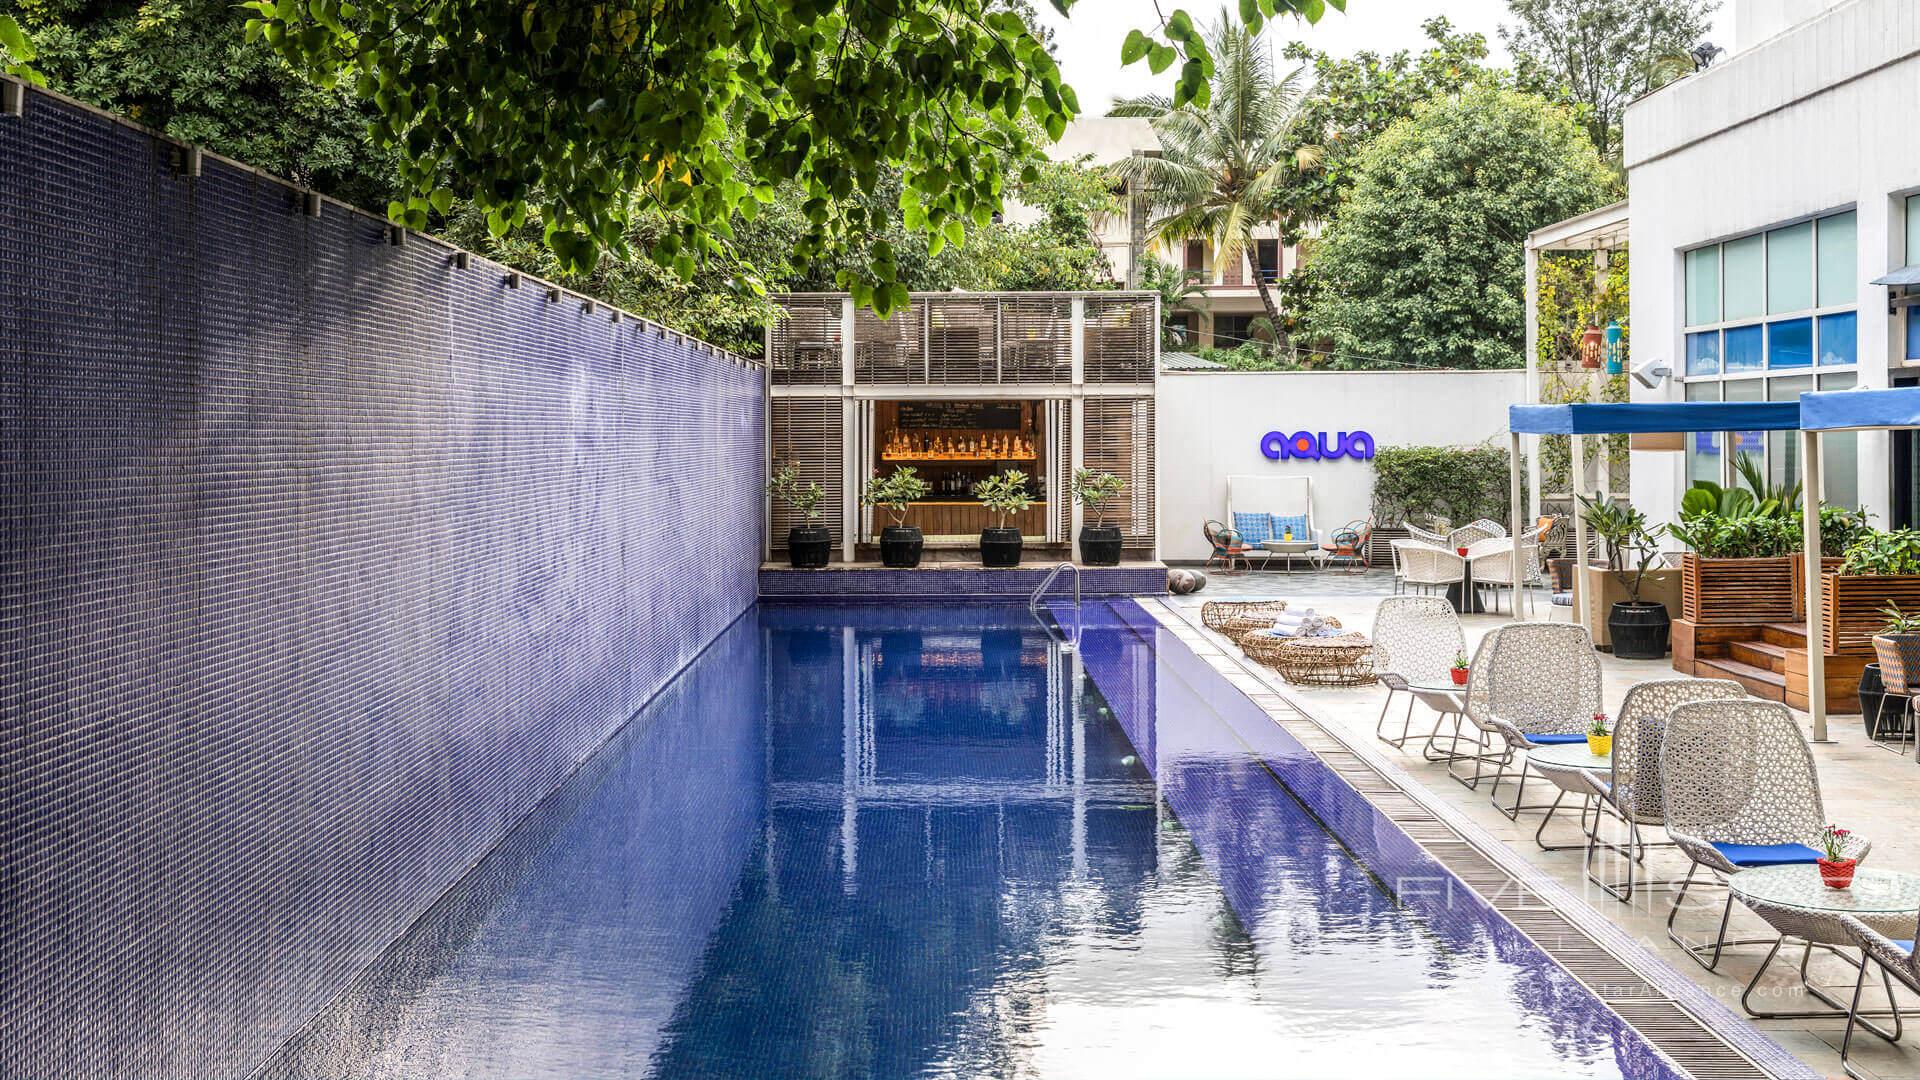 The Park Hotel Bangalore